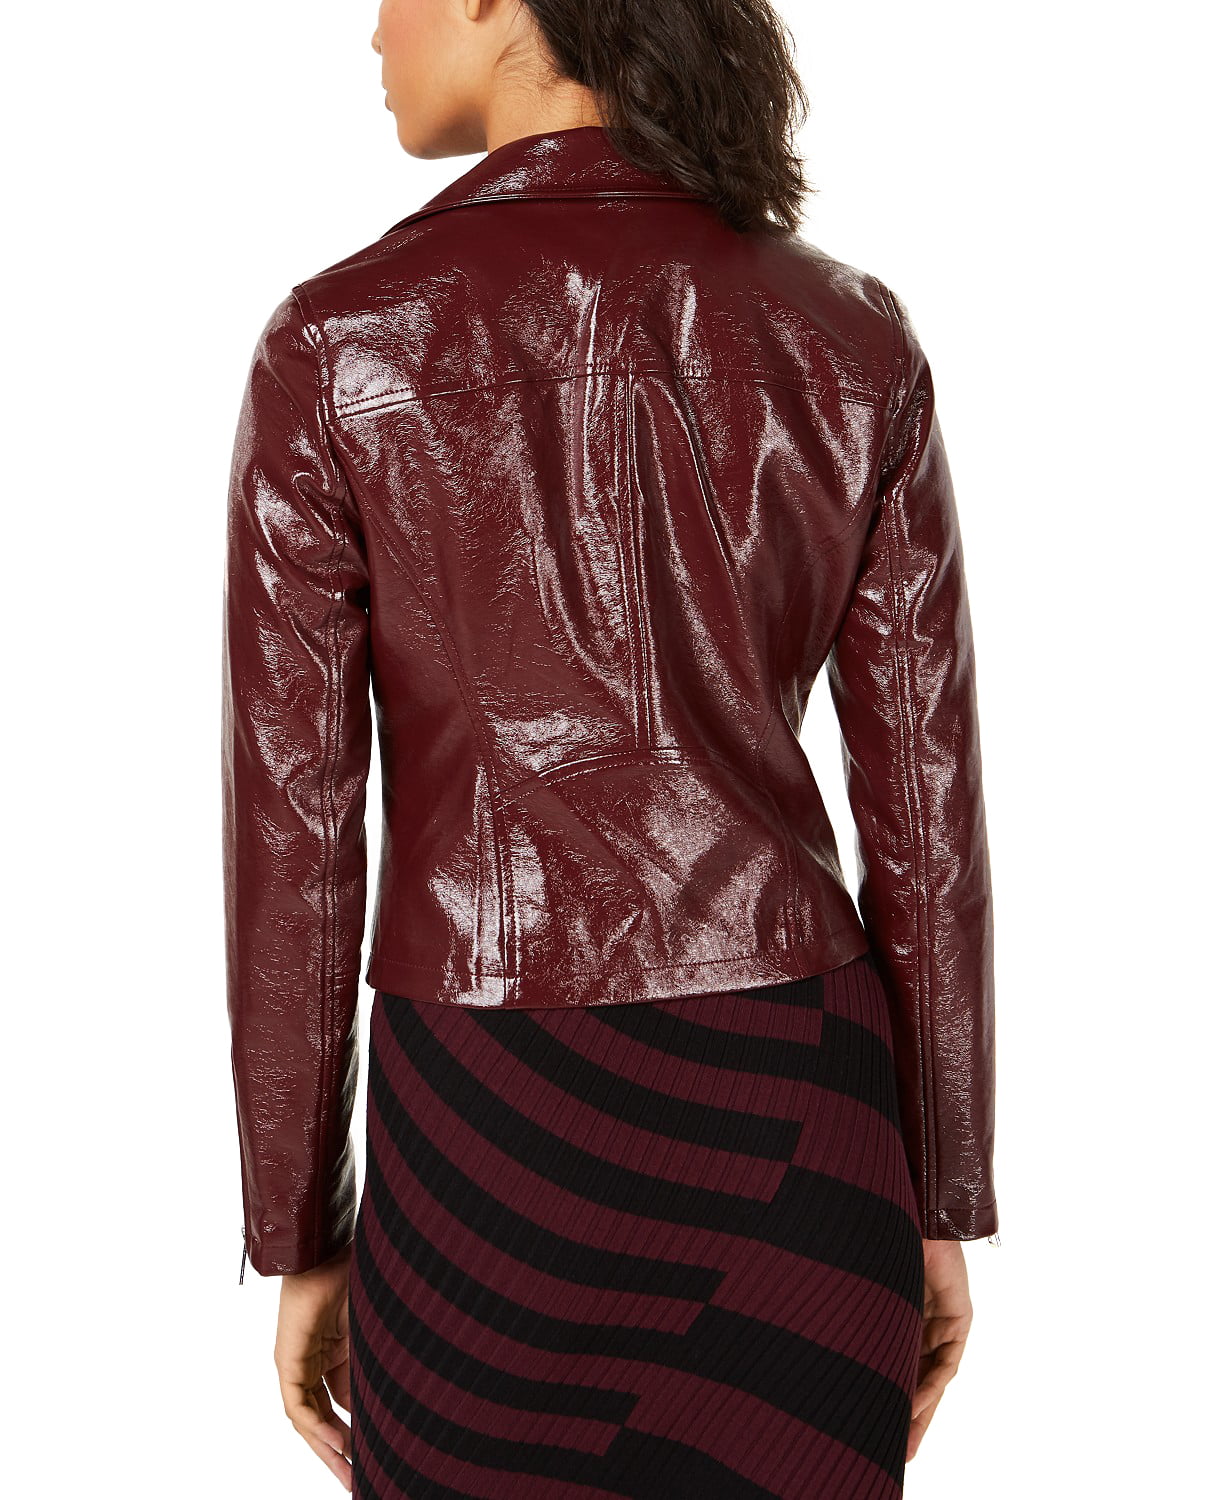 bar III Womens Zip-Front Faux-Leather Jacket, Red, Medium - Walmart.com